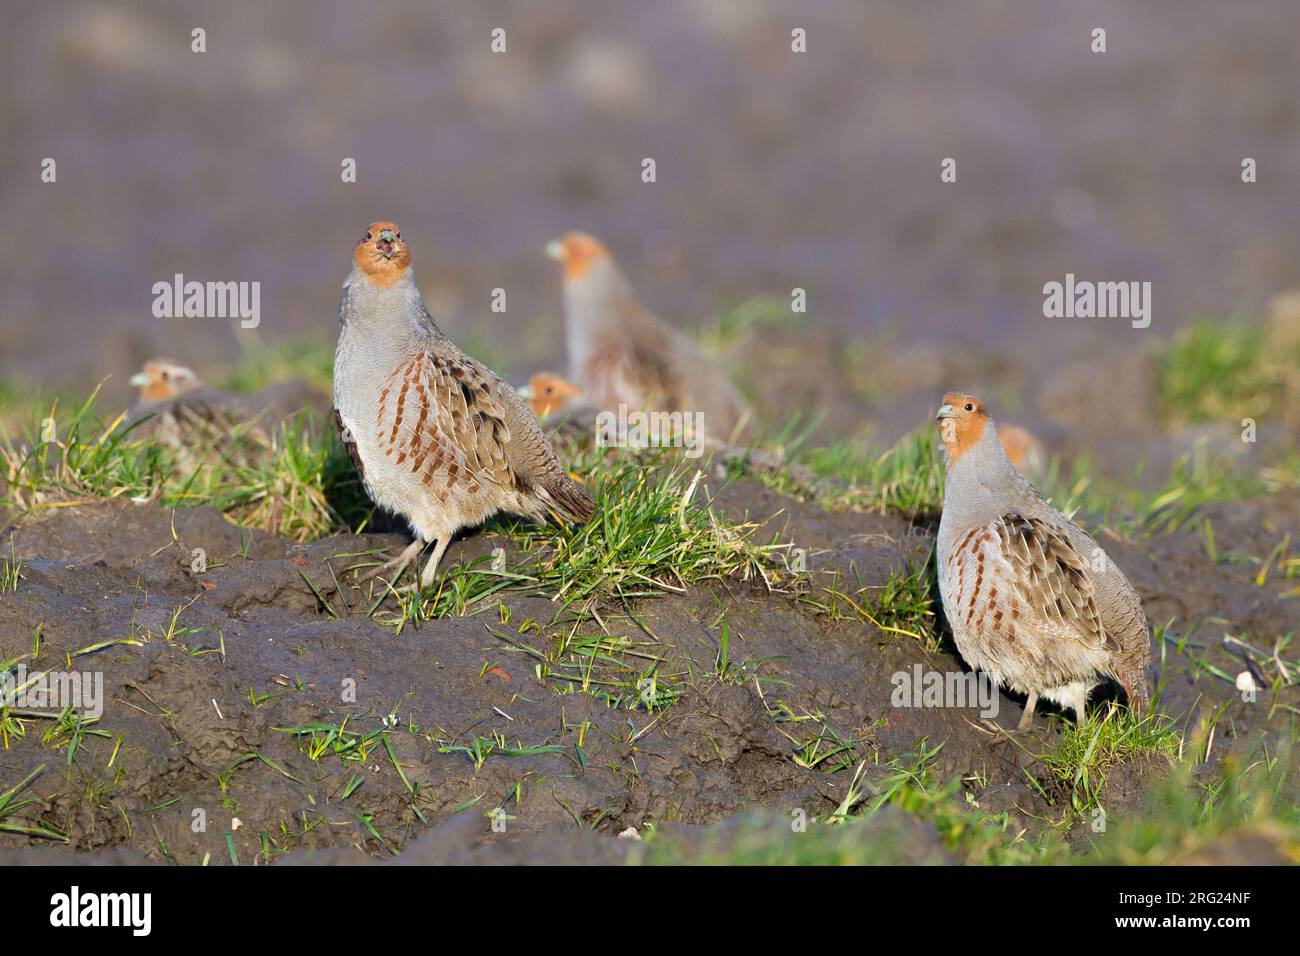 Grey Partridge, Perdix perdix family flock at agriculture field created for birds Stock Photo